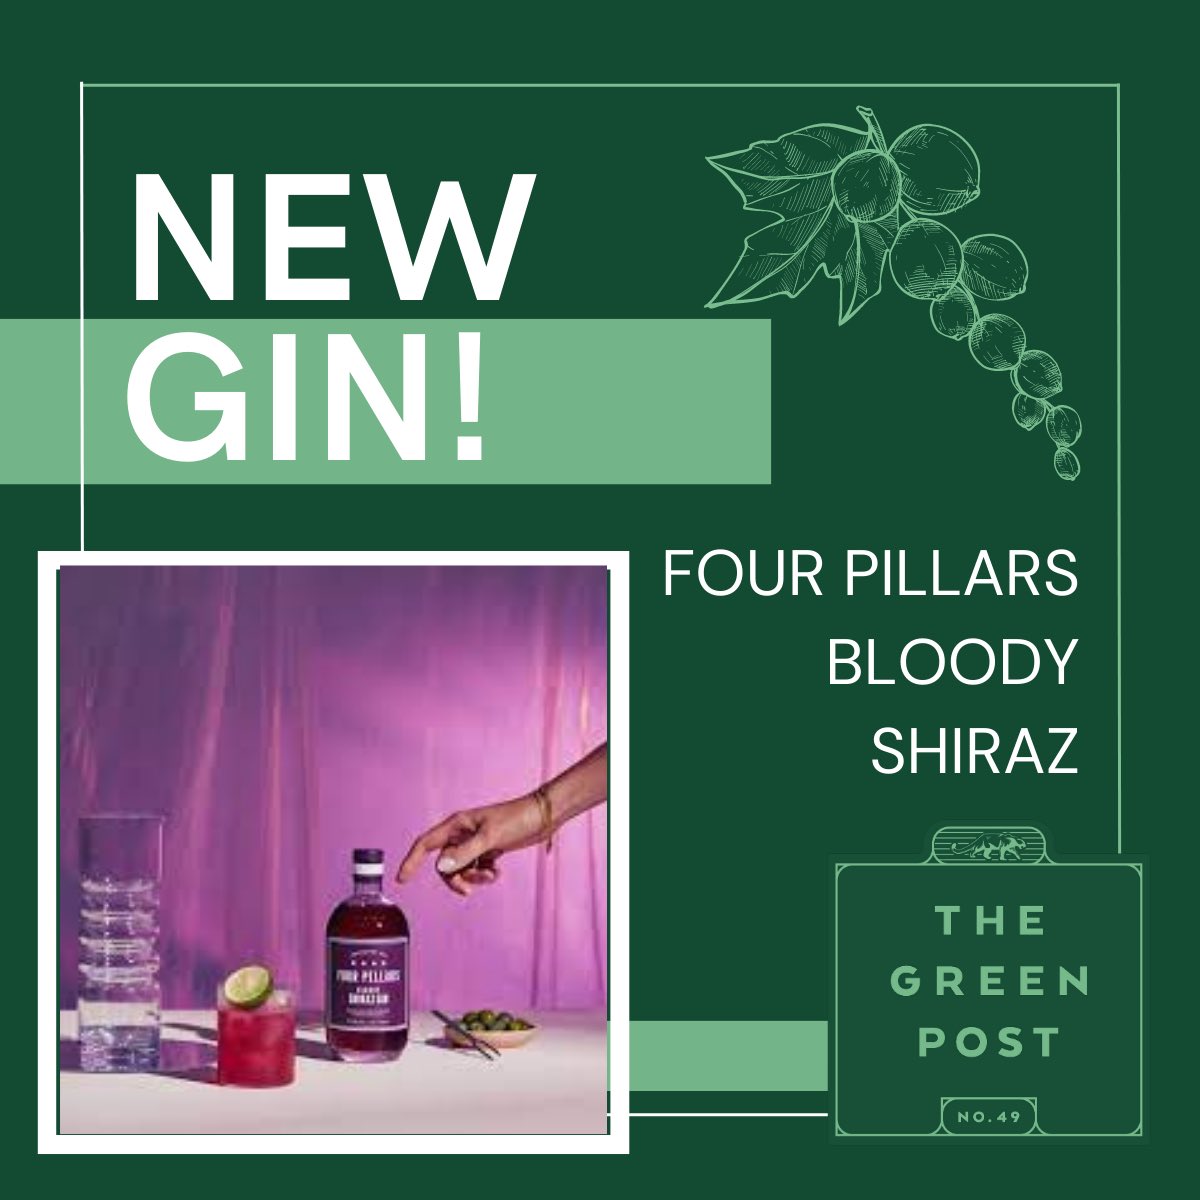 Another New Gin Alert!!!! Introducing Four Pillars Gin Bloody Shiraz - Happy Friday!

#greenpostpub #lincolnsquare #friday #friyay #ginlover #fridaynight #fridayvibes #datenight #weekendplans #weekendvibes #allthegins #somanygins #gin